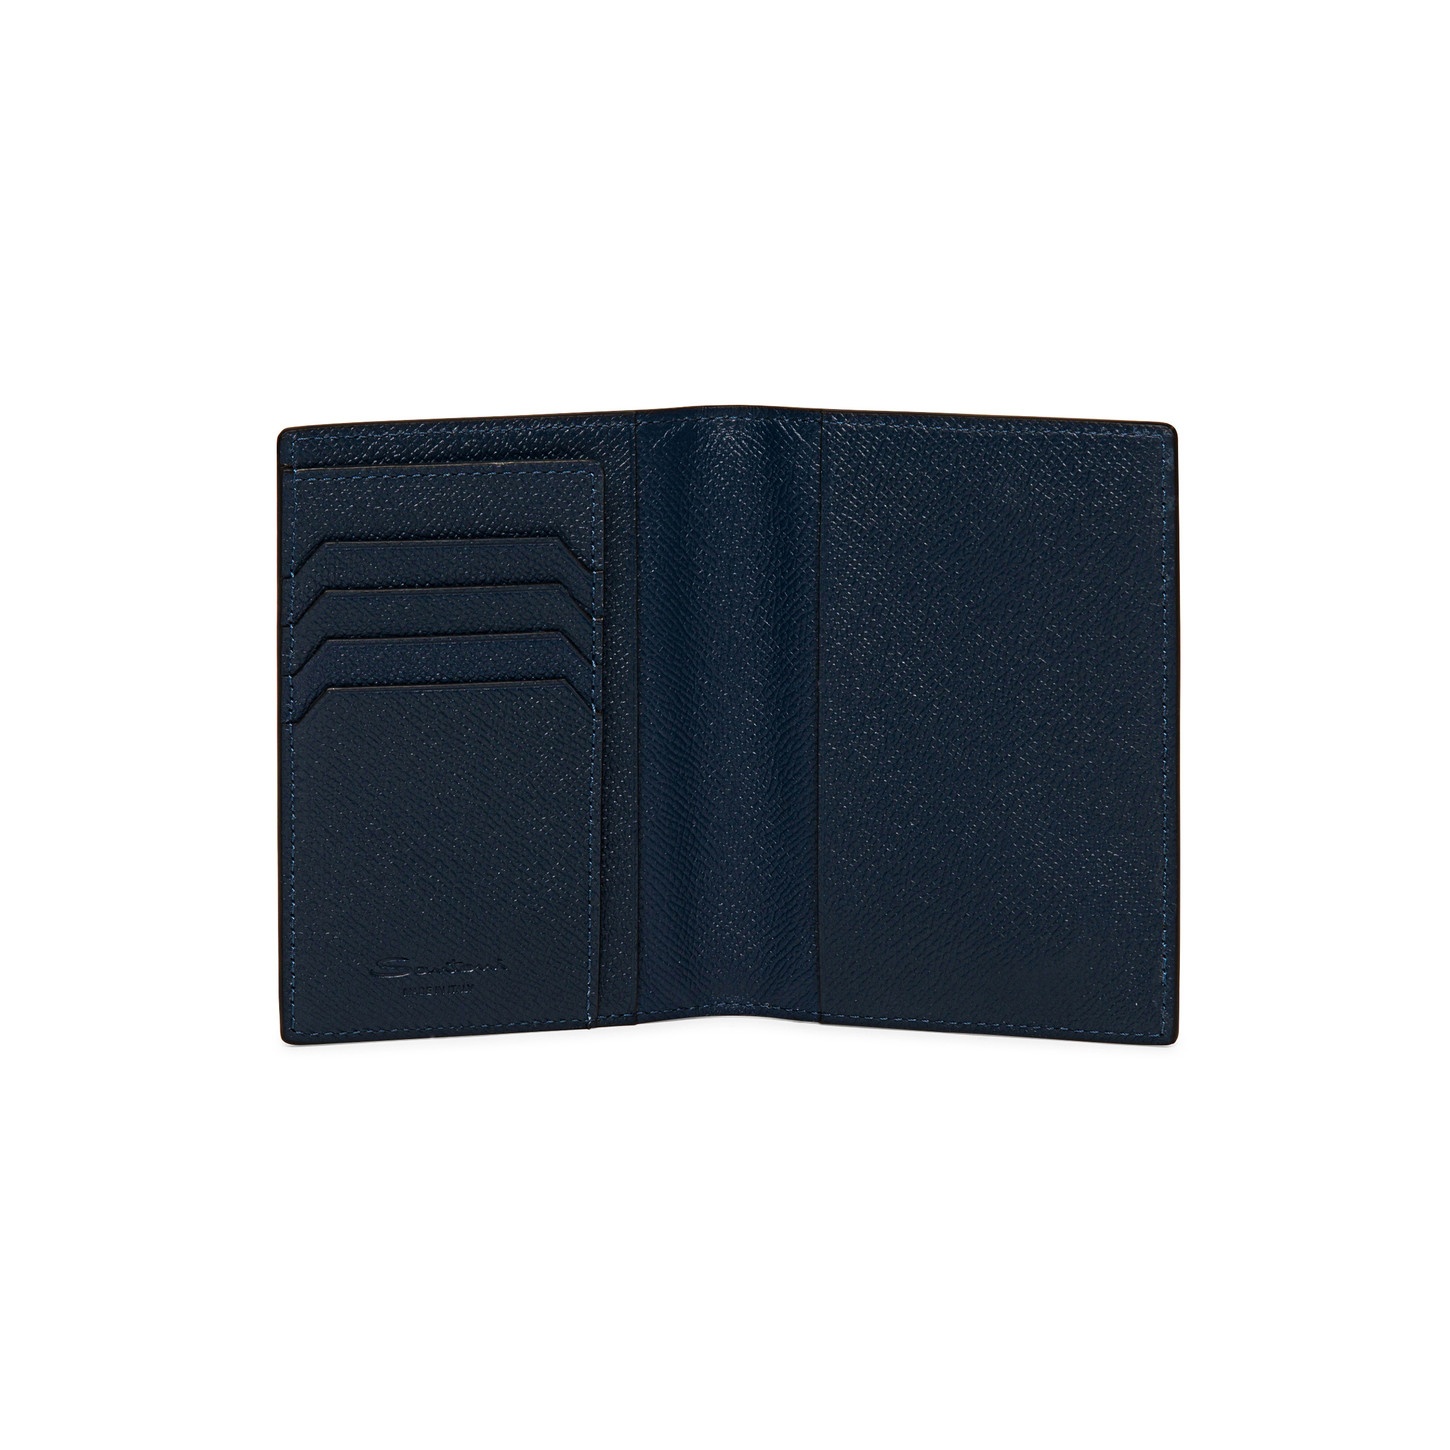 Blue saffiano leather passport case - 3